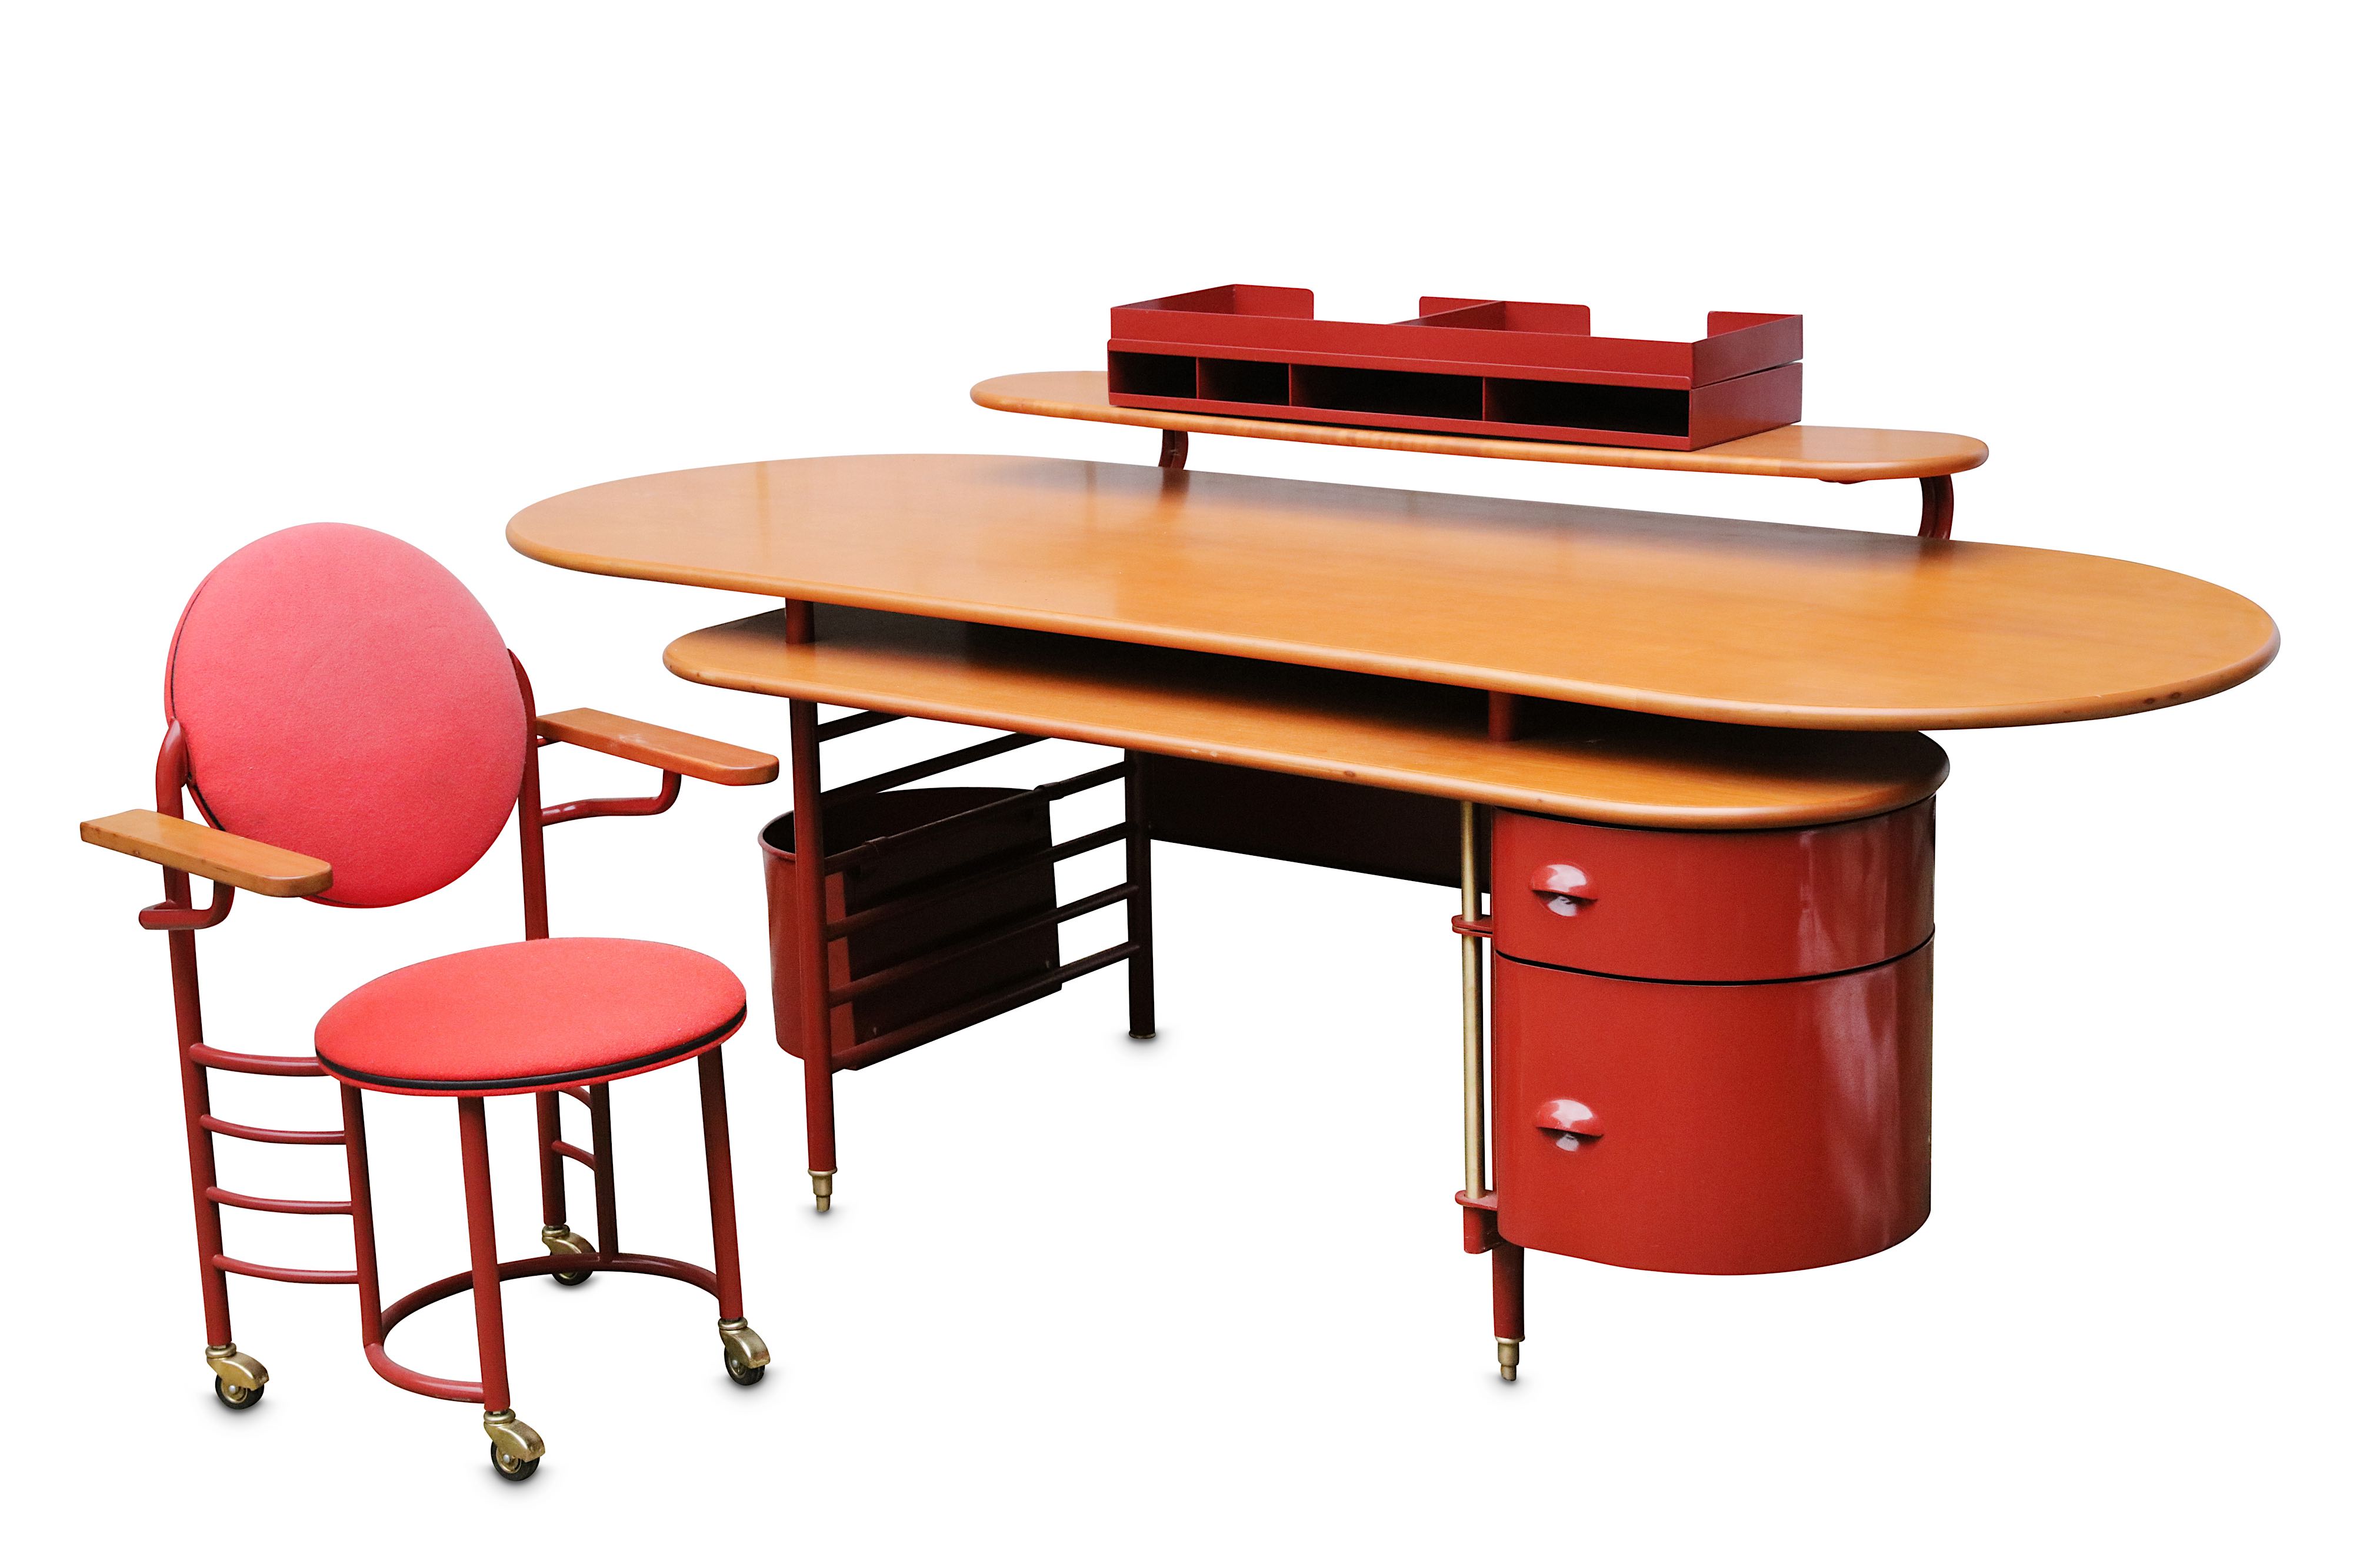 FRANK LLOYD WRIGHT 'Johnson Wax' Desk and Chair, designed 1936